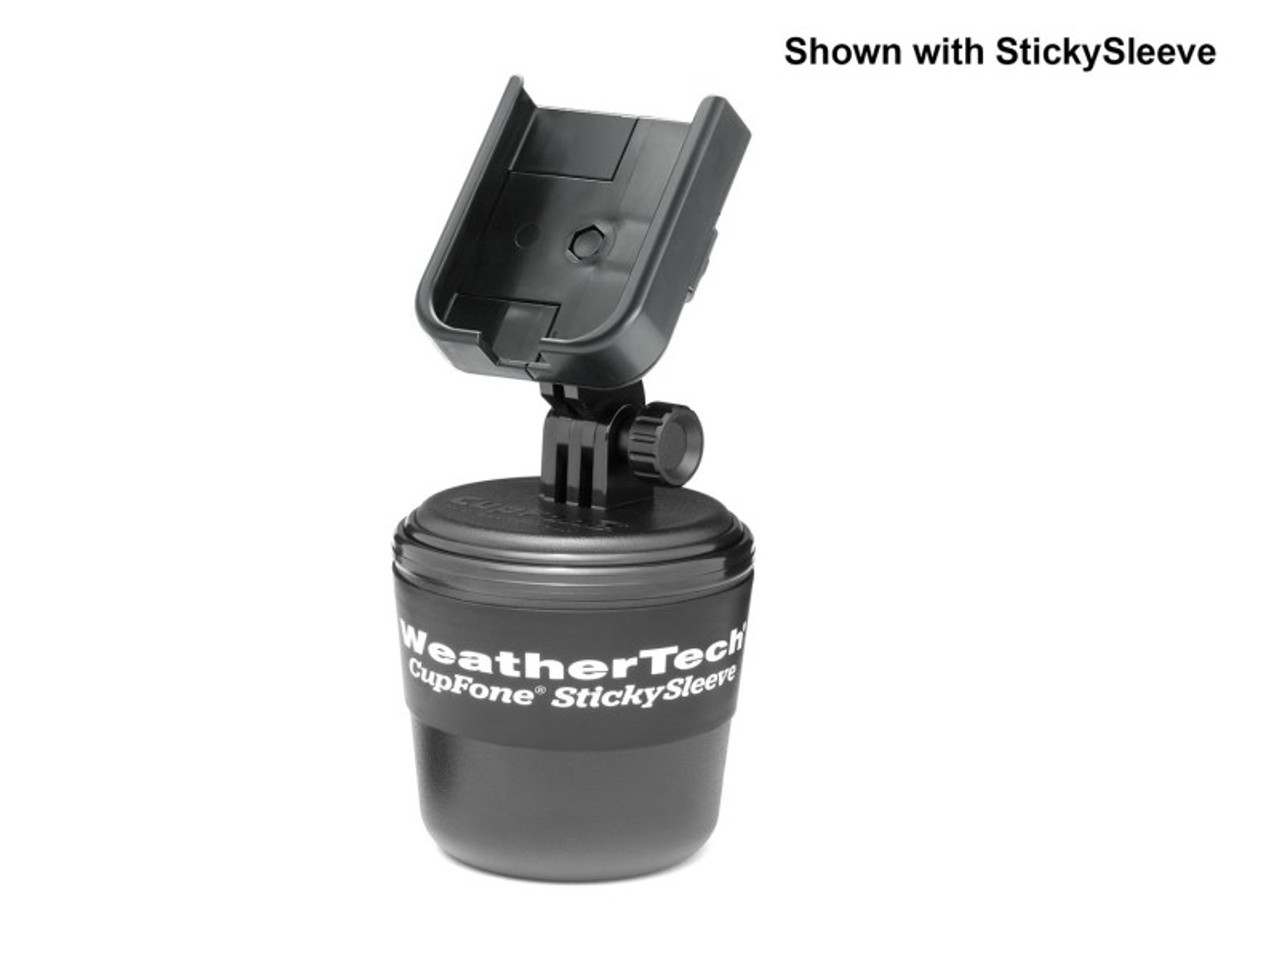 WeatherTech CupFone Sticky Sleeve - 84CF22SS User 1